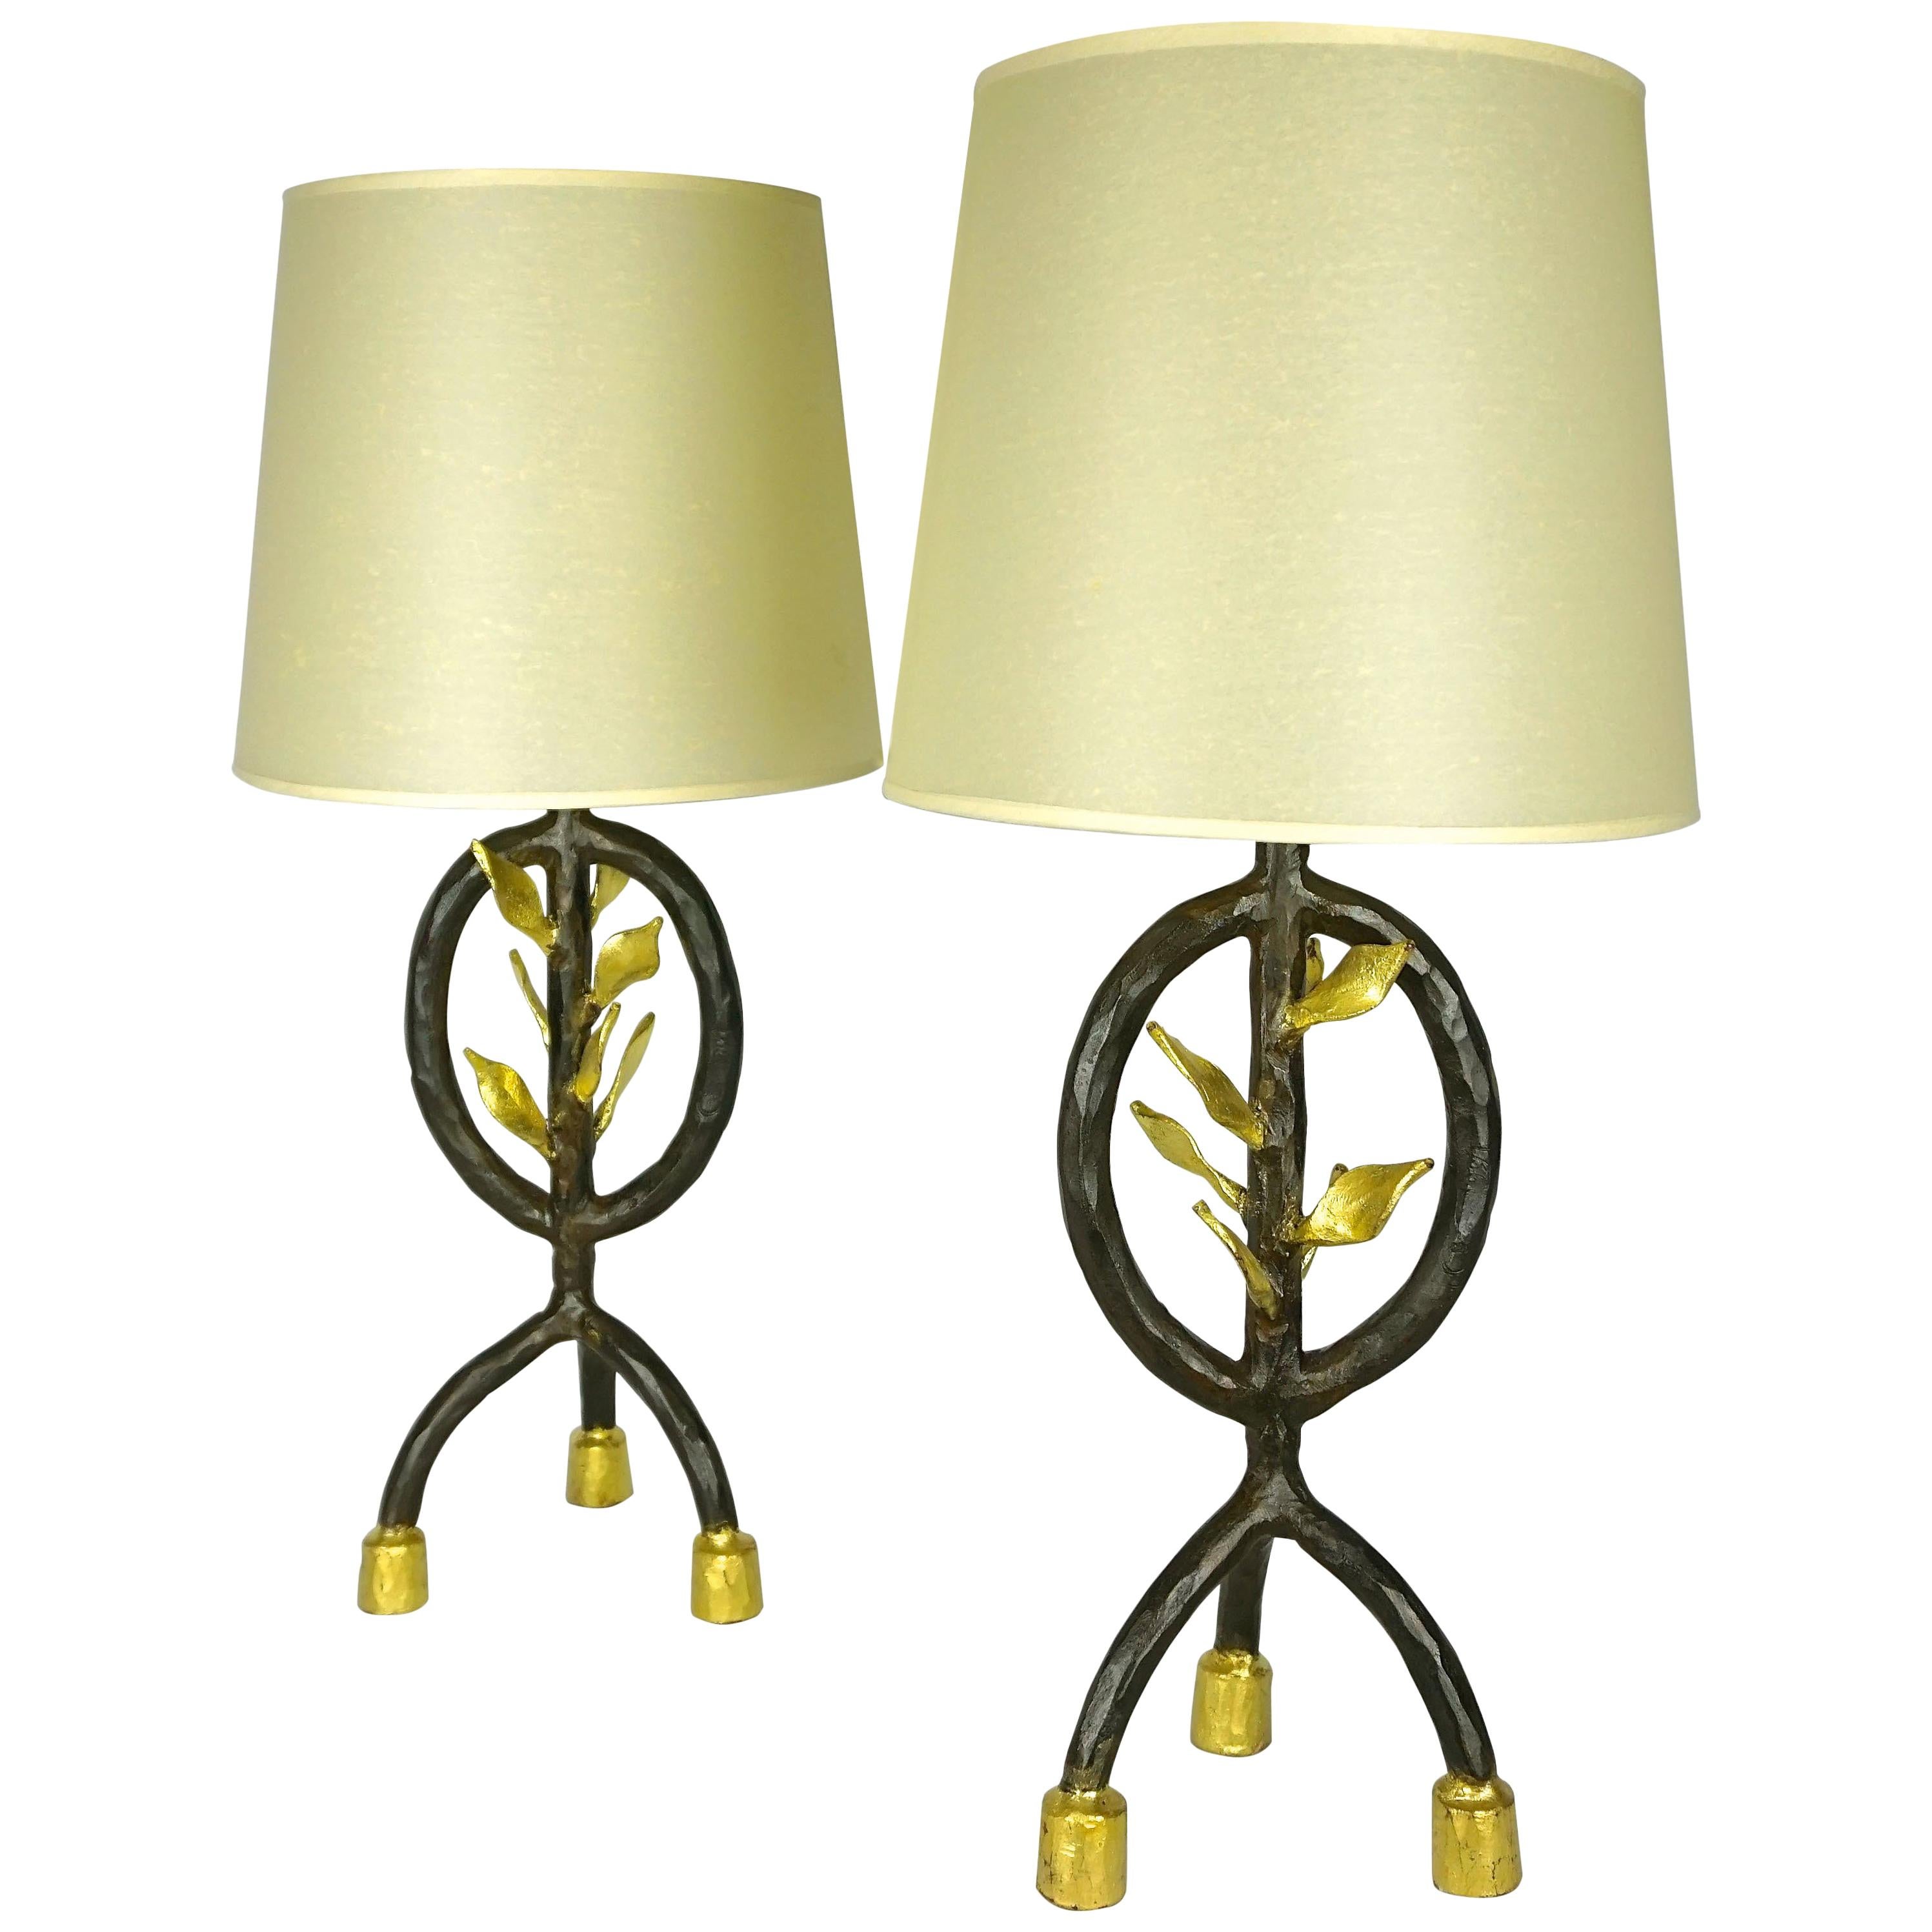 Pair of Table Lamps by Elizabeth Garouste and Mattia Bonetti